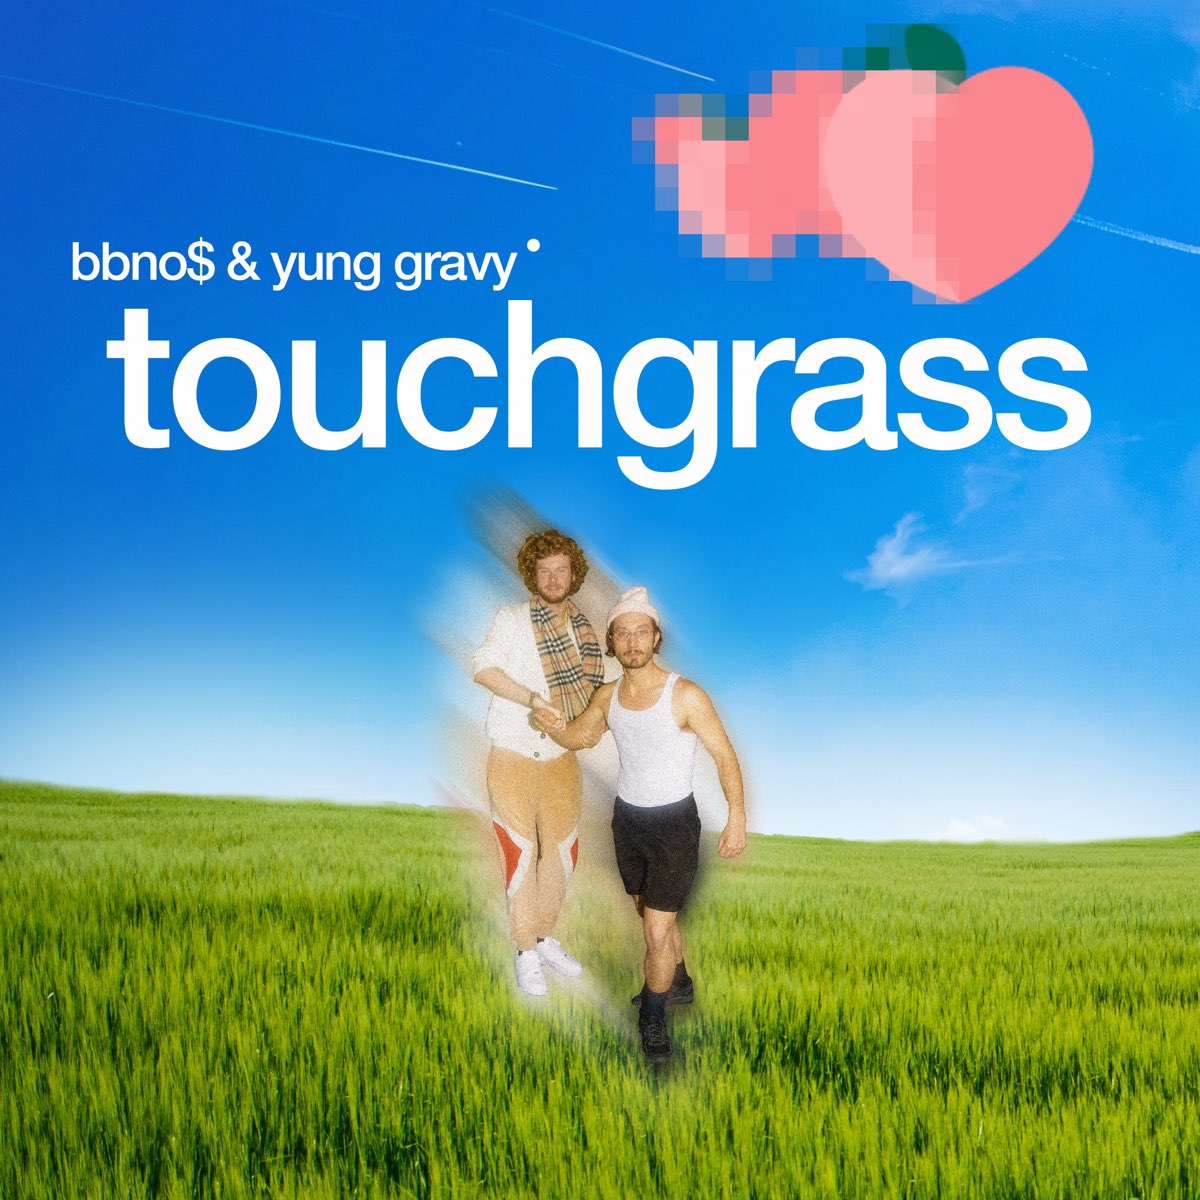 bbno$ & Yung Gravy 🍯 - touch grass (feat. Yung Gravy)